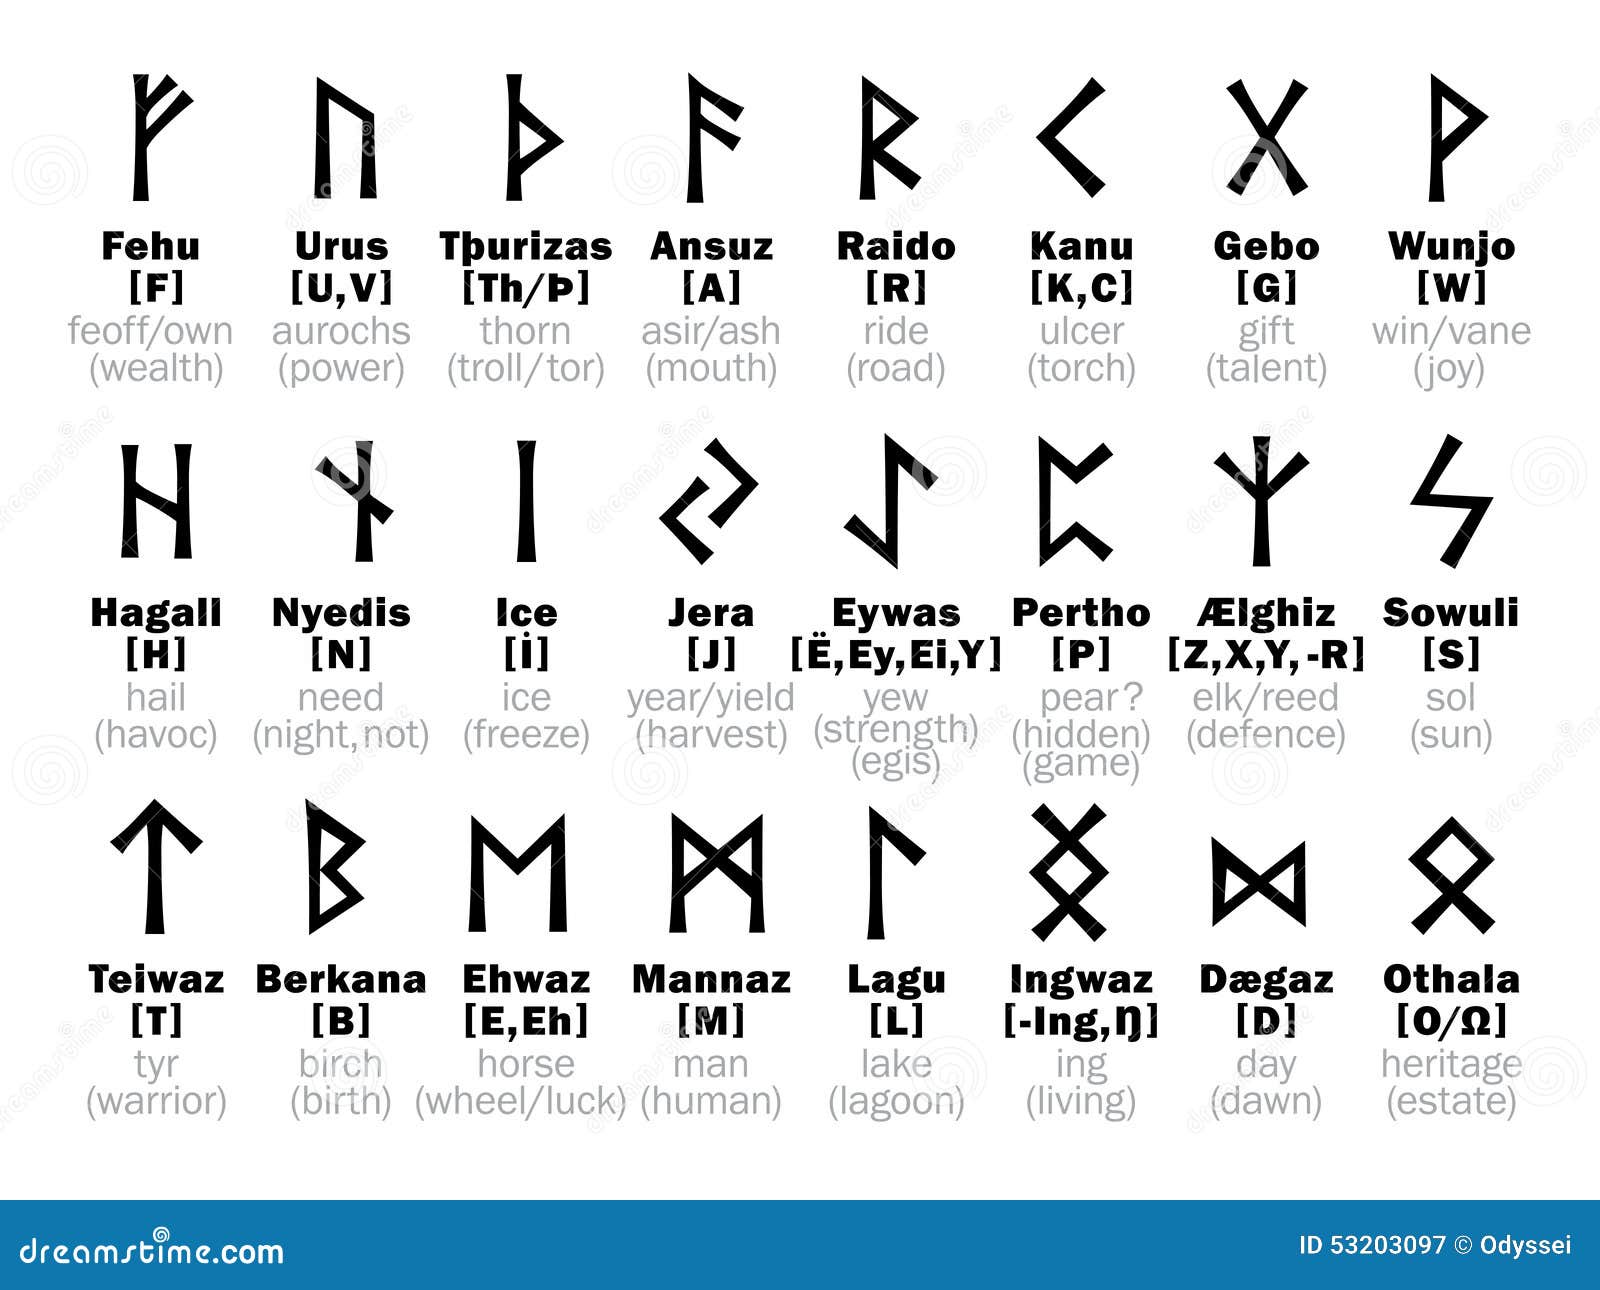 futhark runic alphabet and its sorcery interpretation